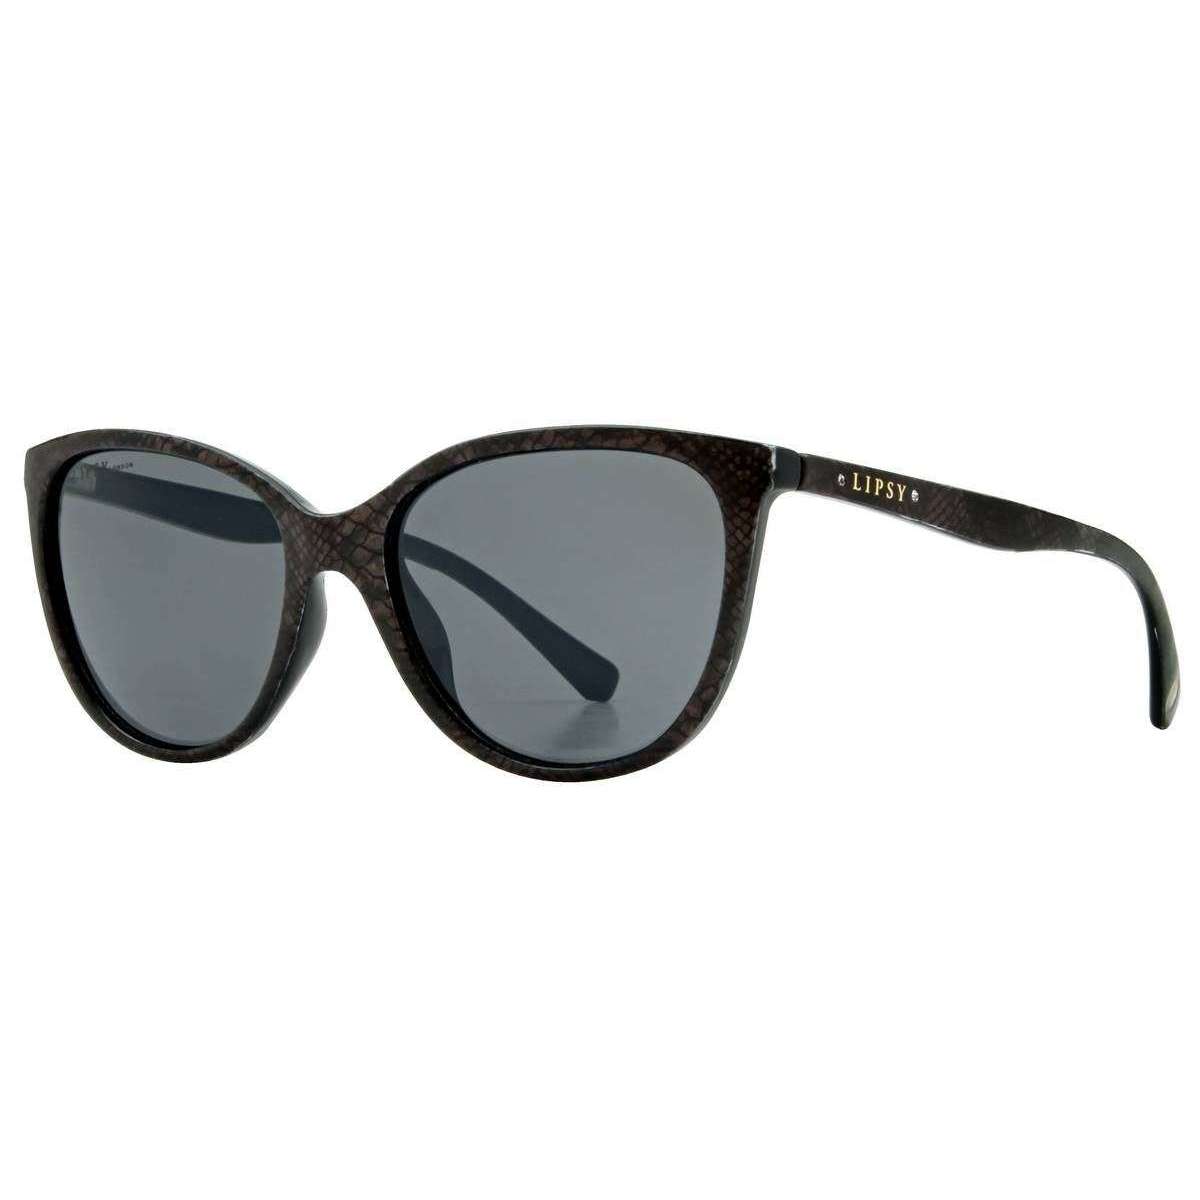 Lipsy London Classic Cat Eye Sunglasses - Shiny Black/Smoke Grey